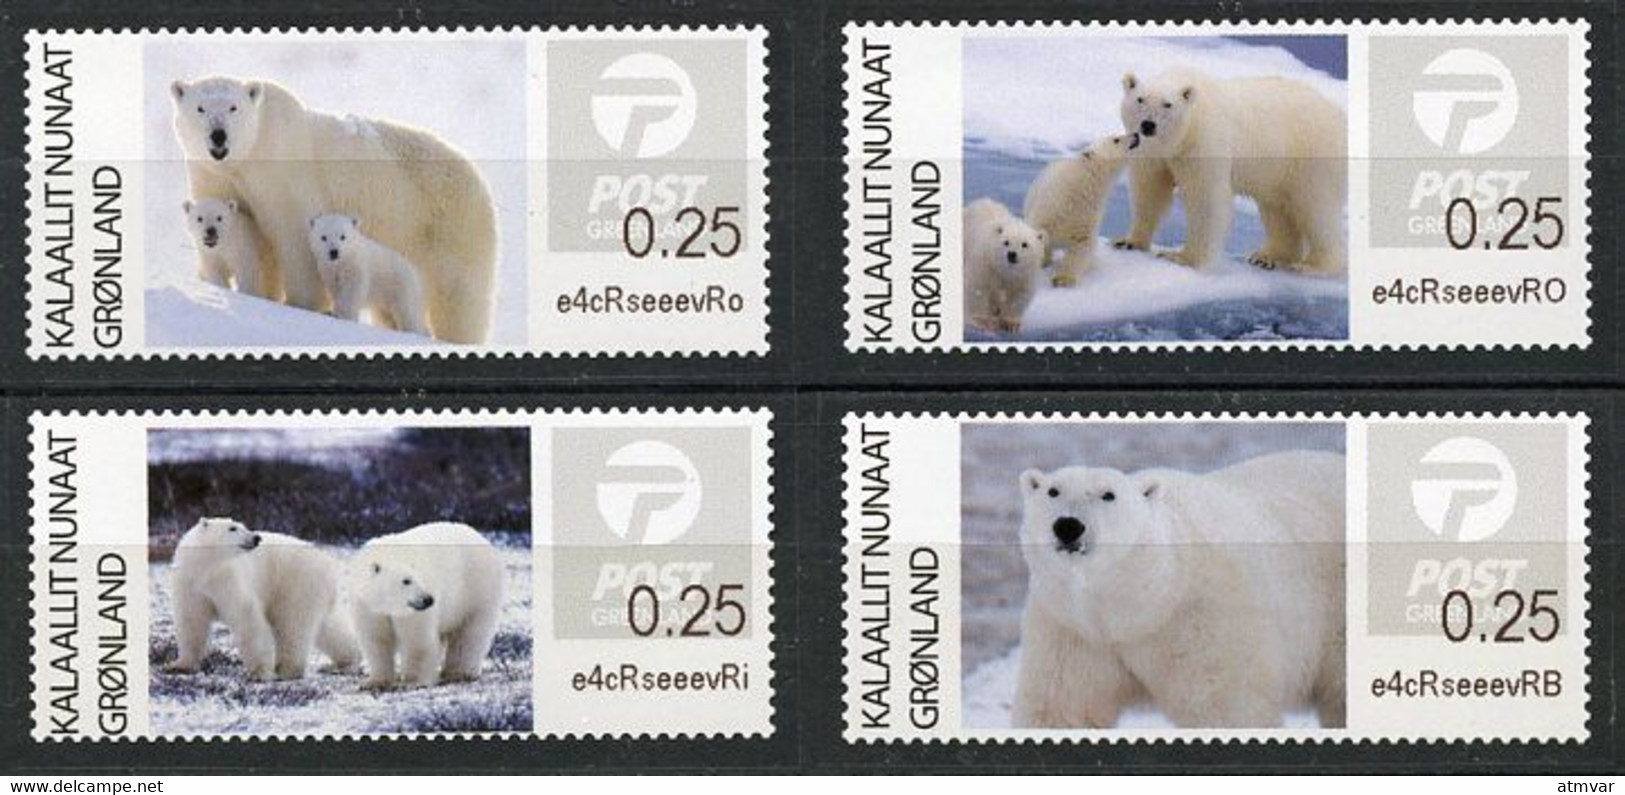 GREENLAND GROENLAND (2019) - ATM Series - Polar Bears, Der Eisbär, Ours Blanc, Oso Polar (Ursus Thalarctos Maritimus) - Distribuidores